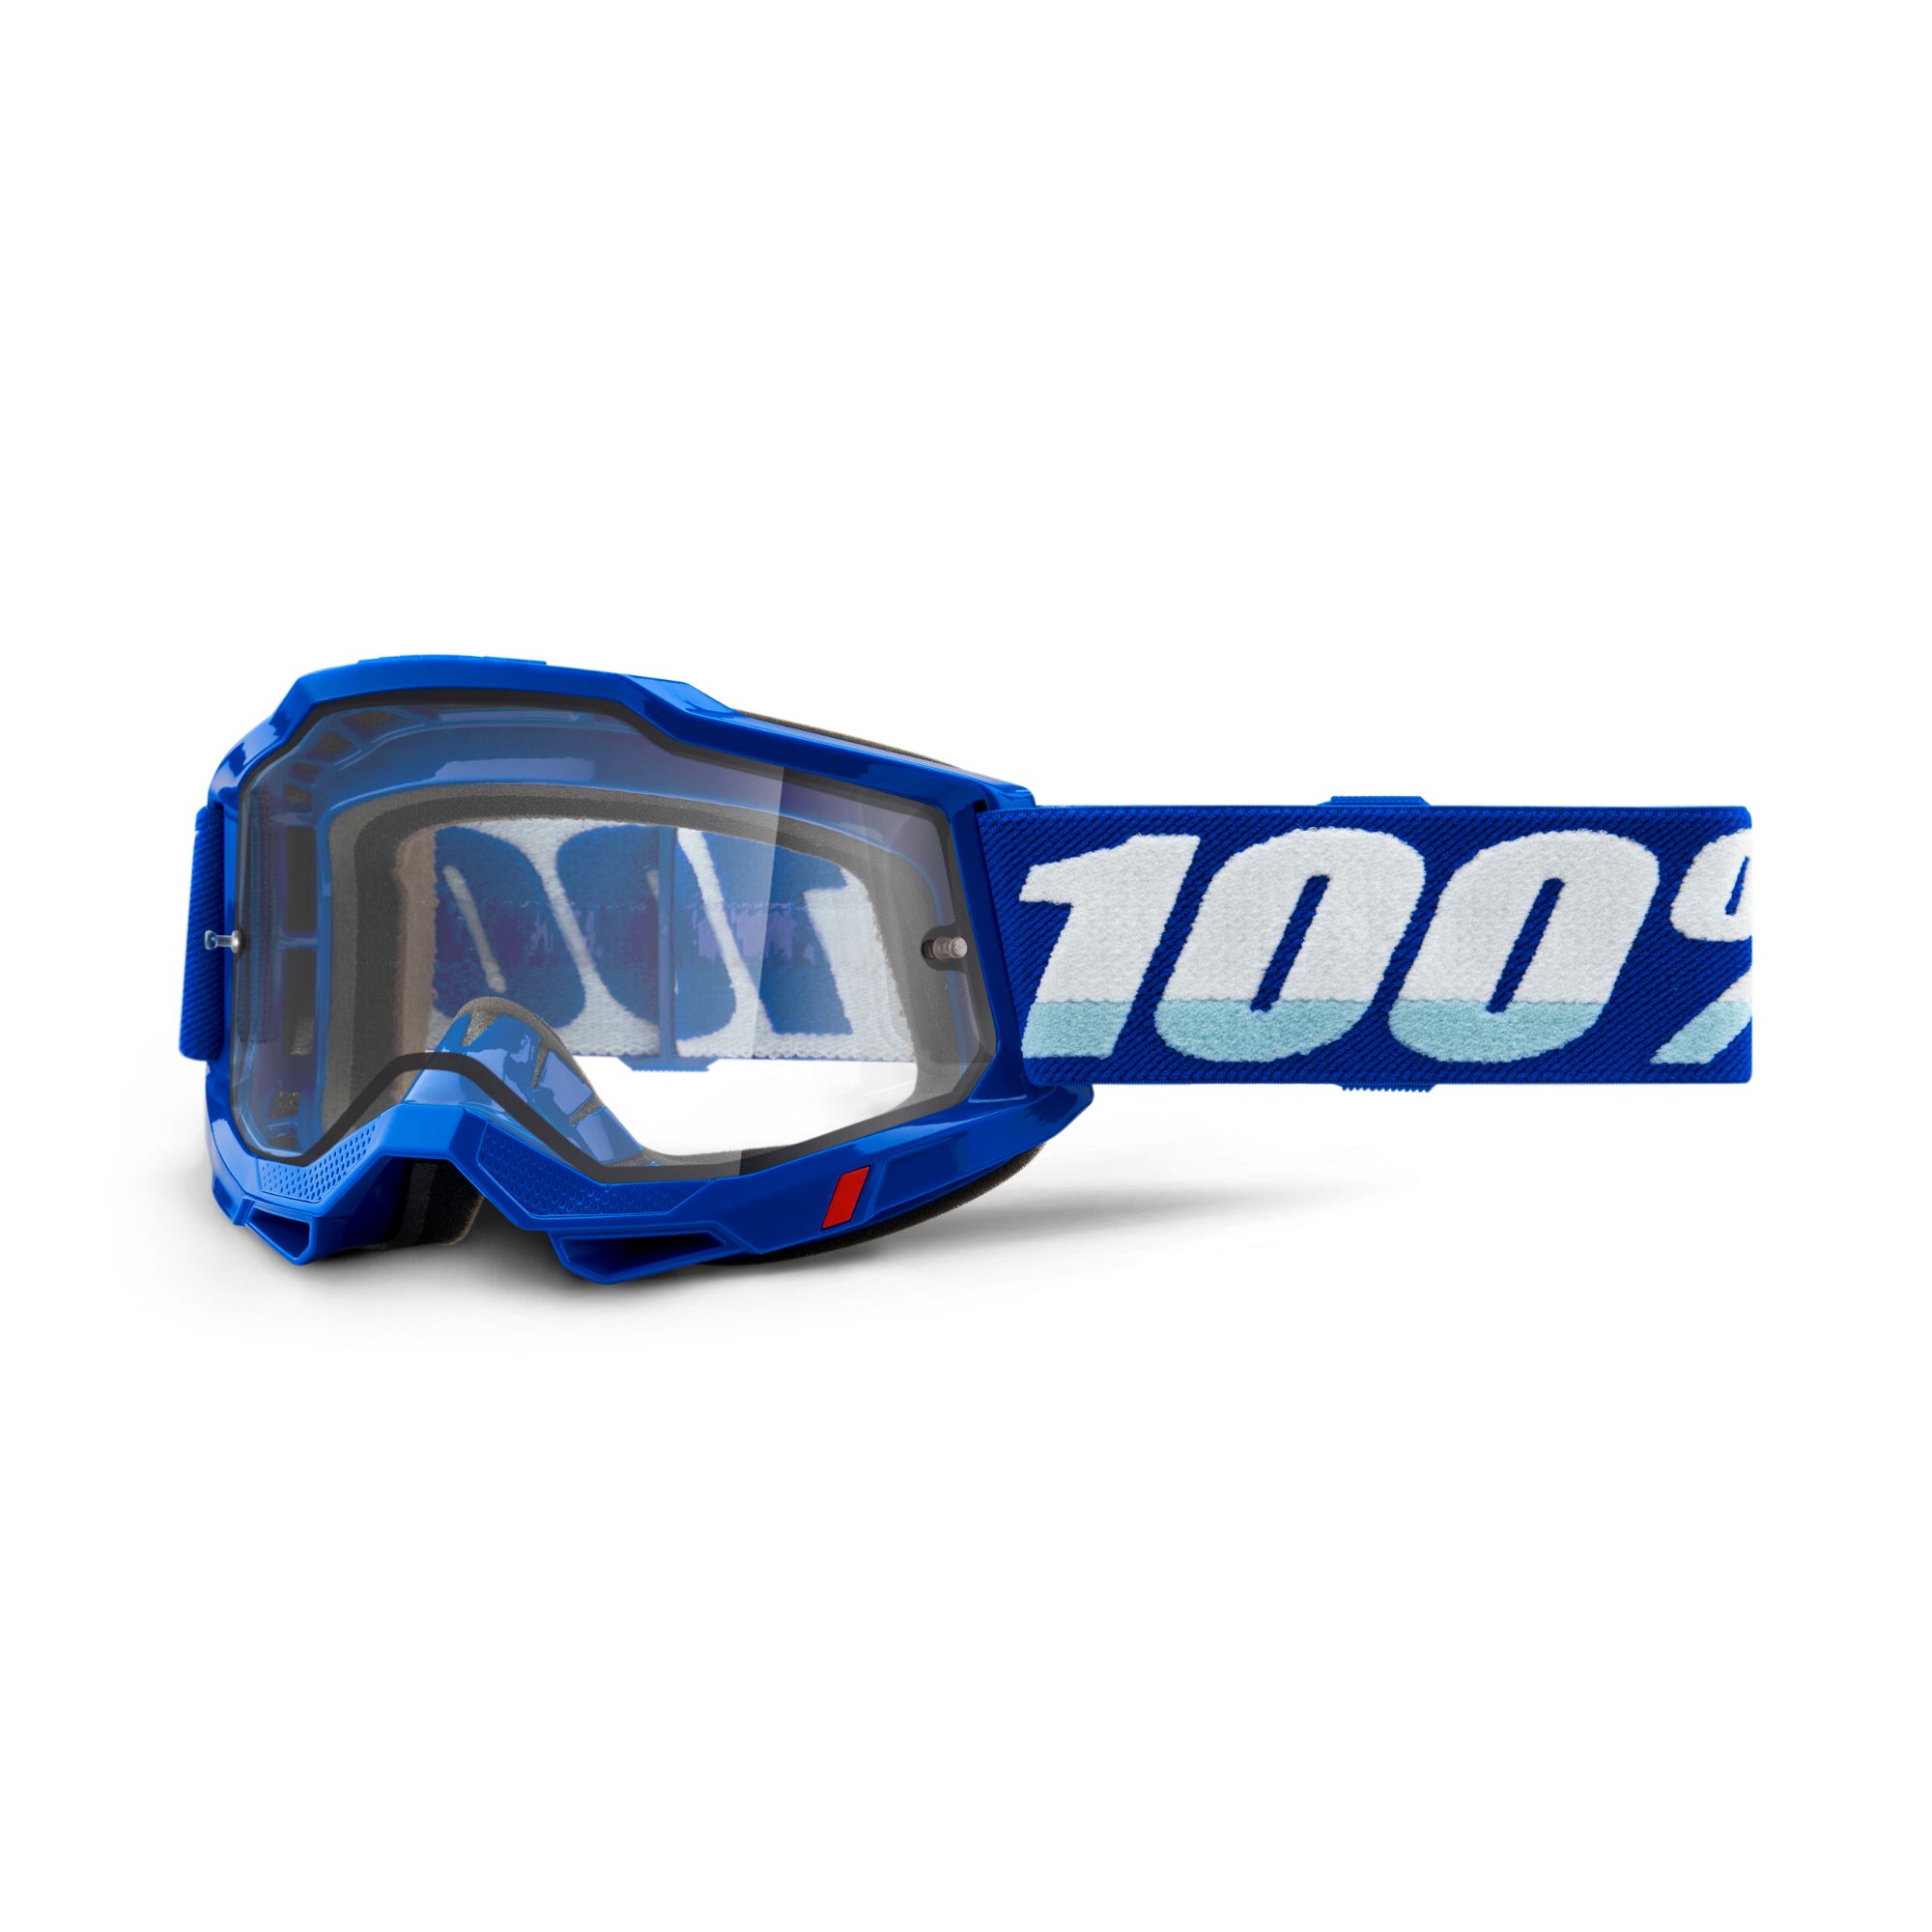 renere hjort Adskillelse 100% Accuri 2 Enduro MX Goggles Blue / Clear Lens | Silverfish UK